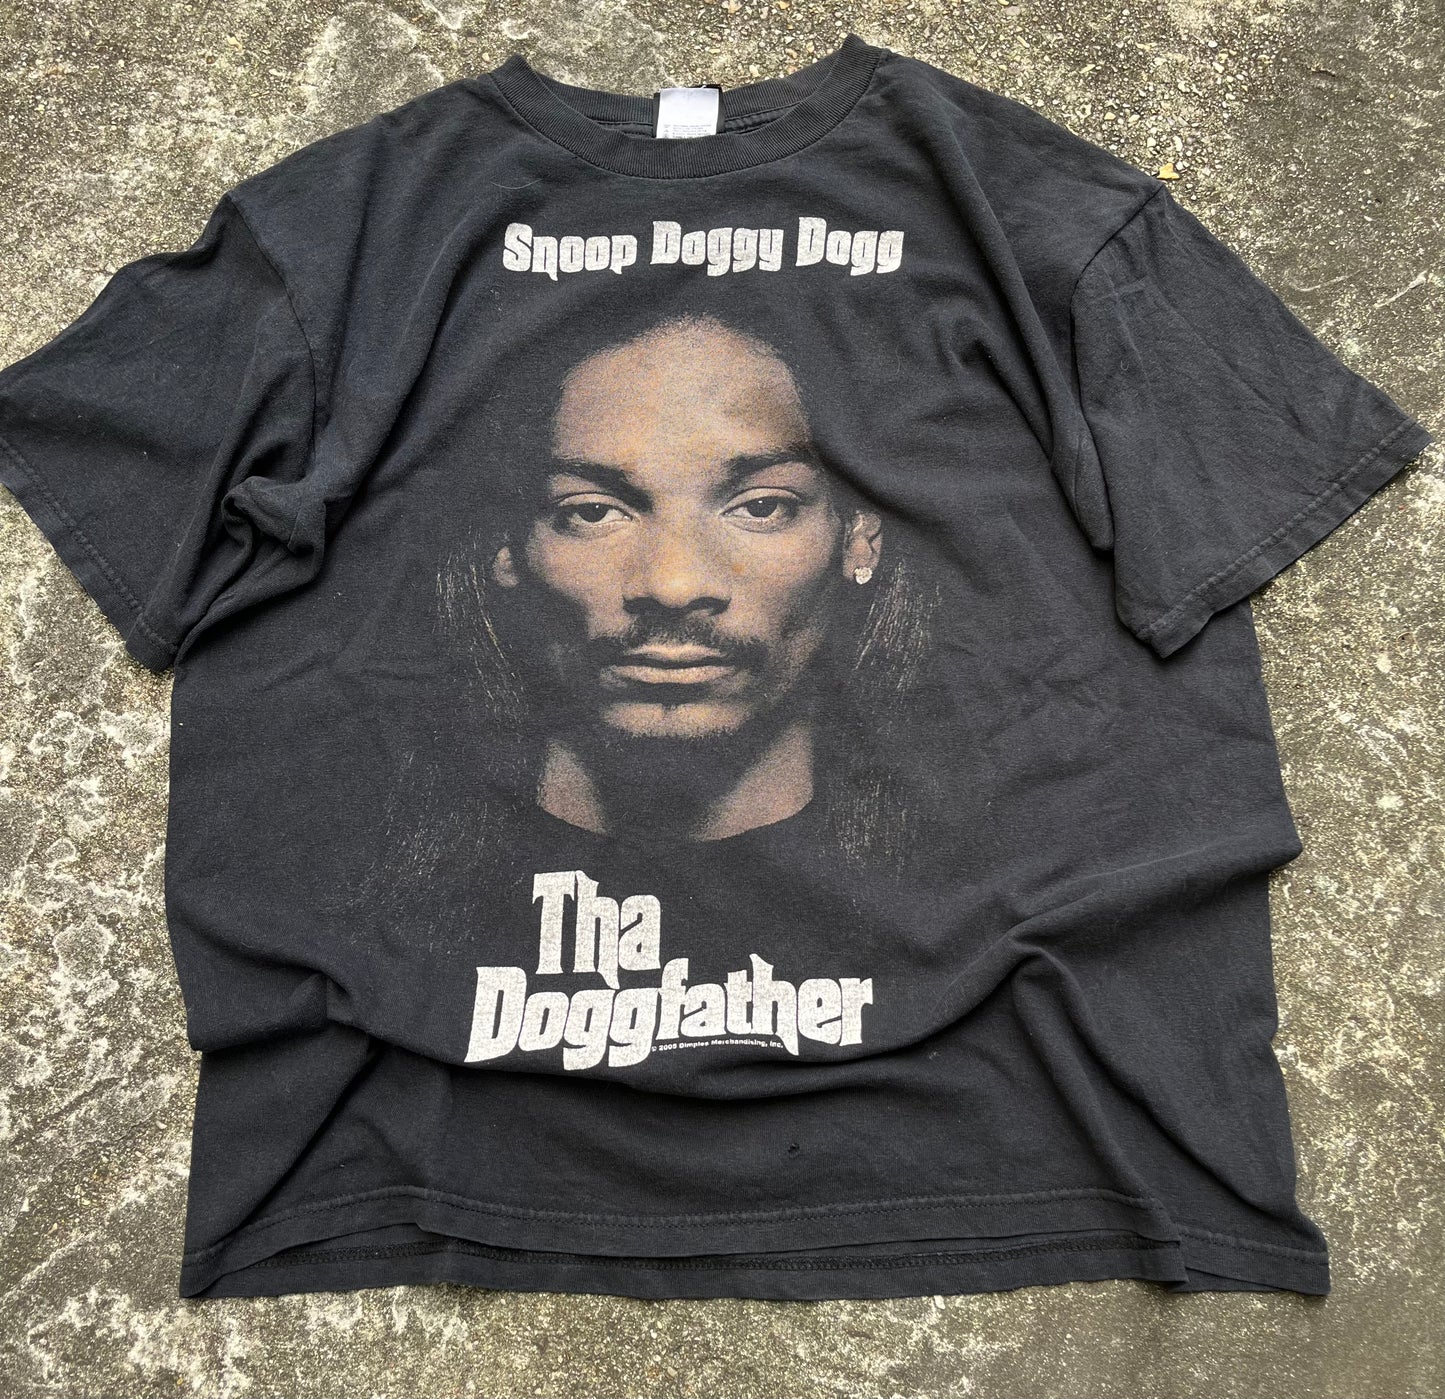 Snoop doggy dogg (L)